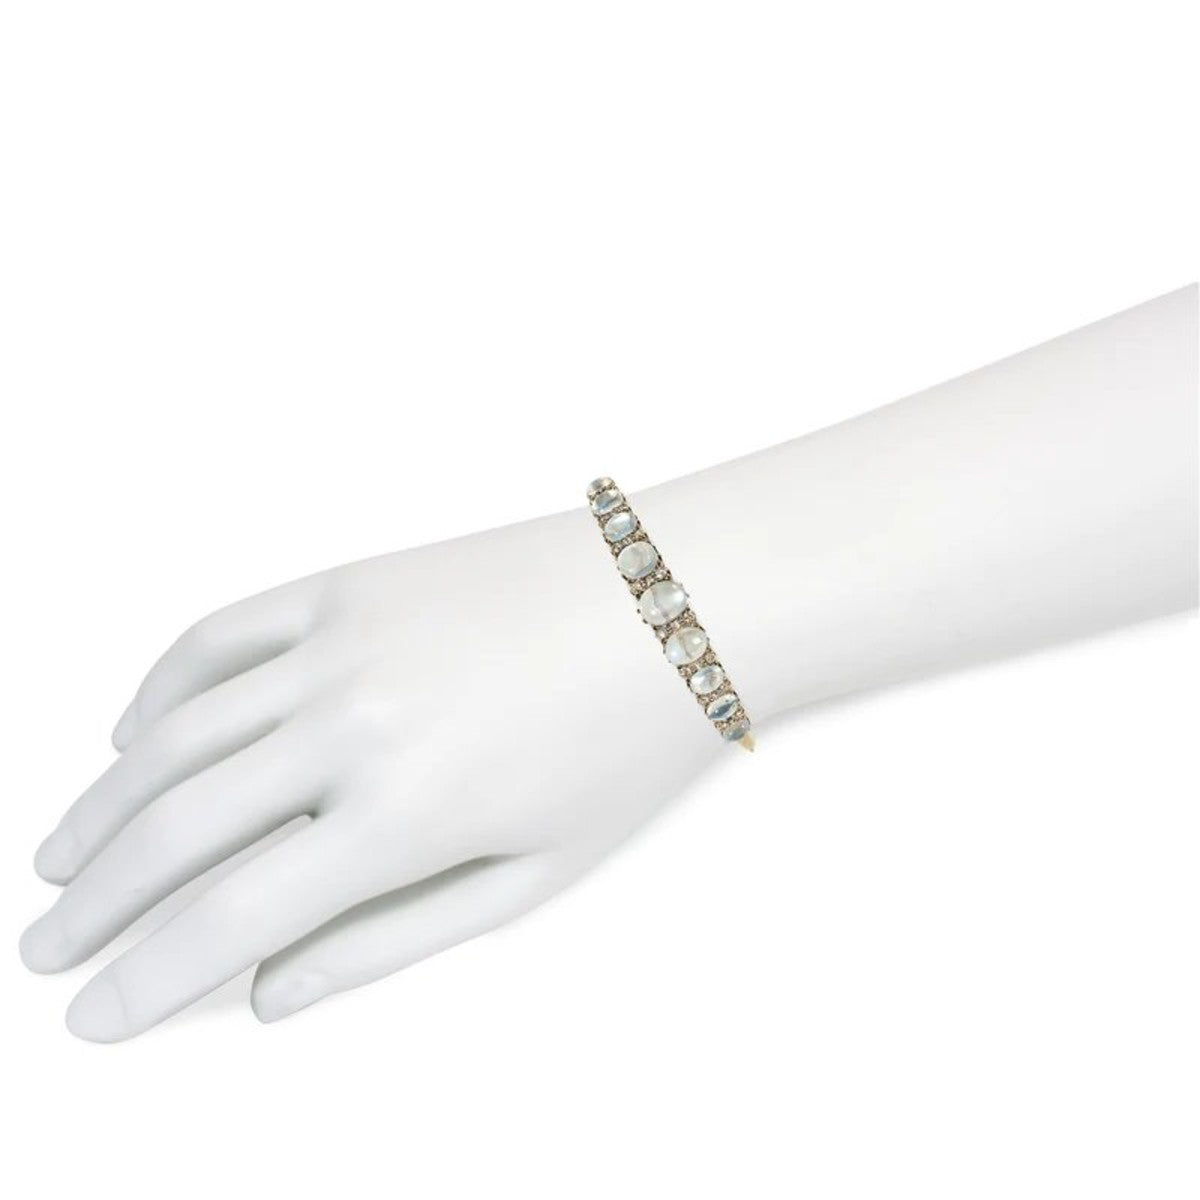 Victorian Silver & 15 KT Yellow Gold Moonstone & Diamond Bangle Bracelet on wrist